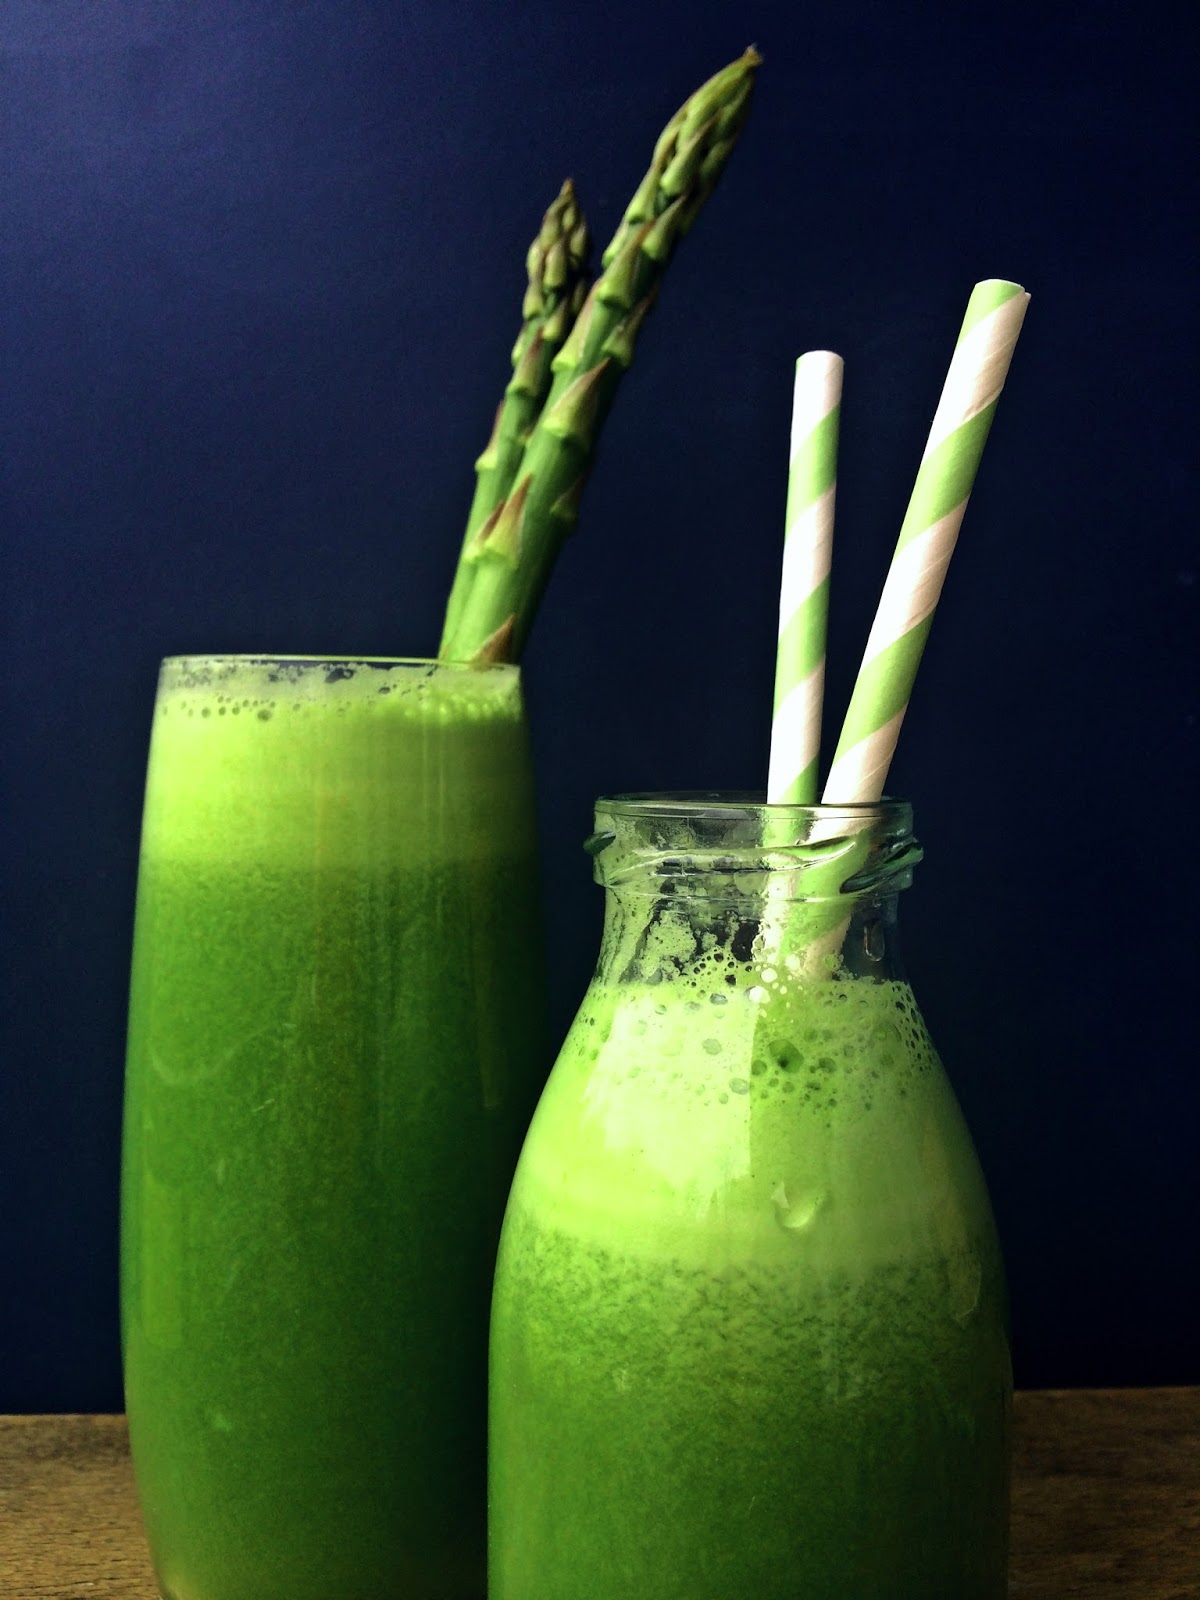 Asparagus Squeeze Plant Wellness Benefits for Men